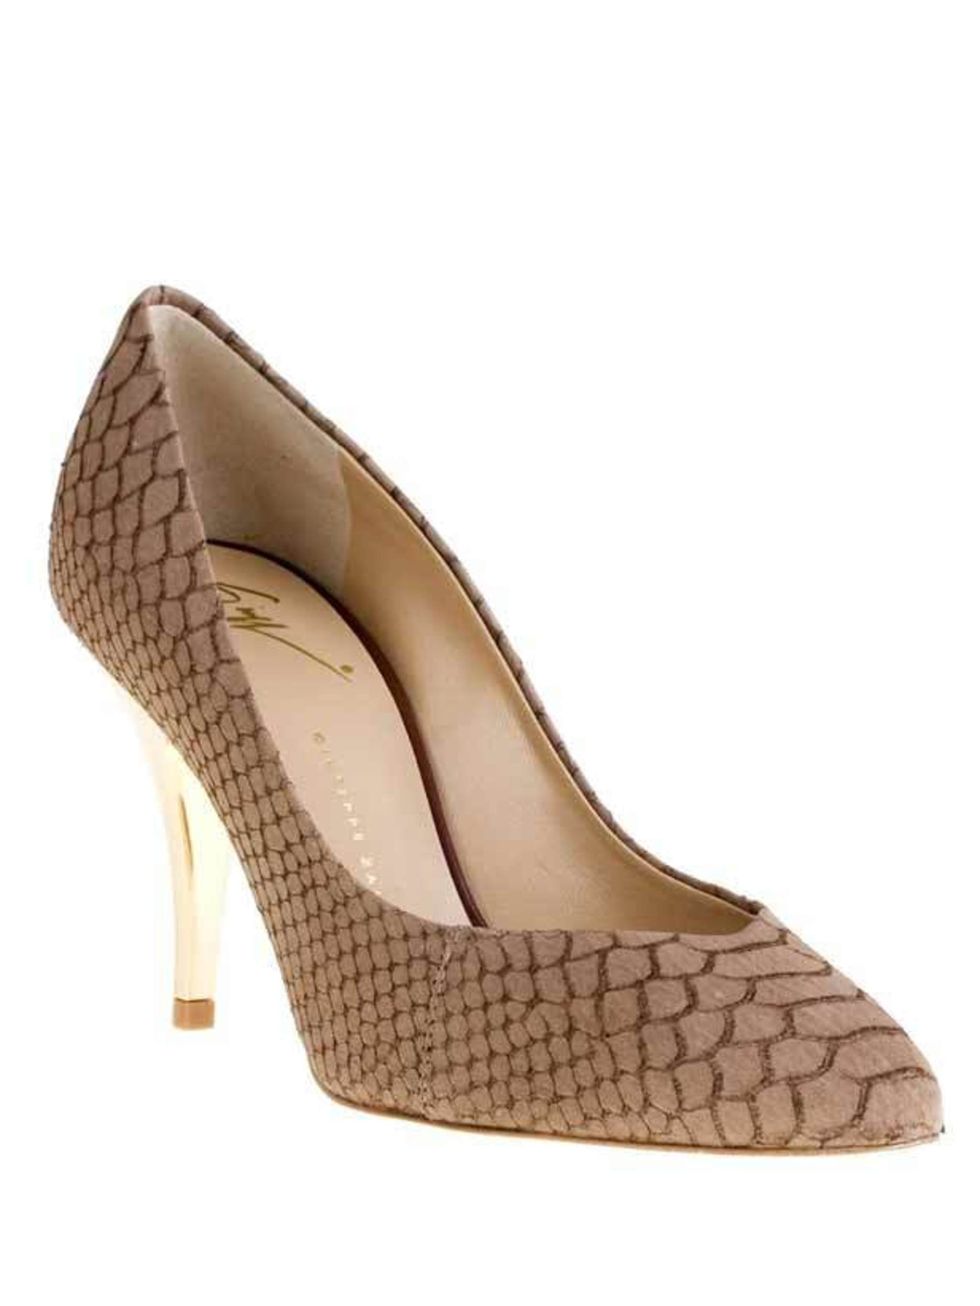 <p>Giuseppe Zanotti python embossed shoe, £354, at <a href="http://www.farfetch.com/shopping/women/giuseppe-zanotti/item10062314.aspx">farfetch.com</a></p>